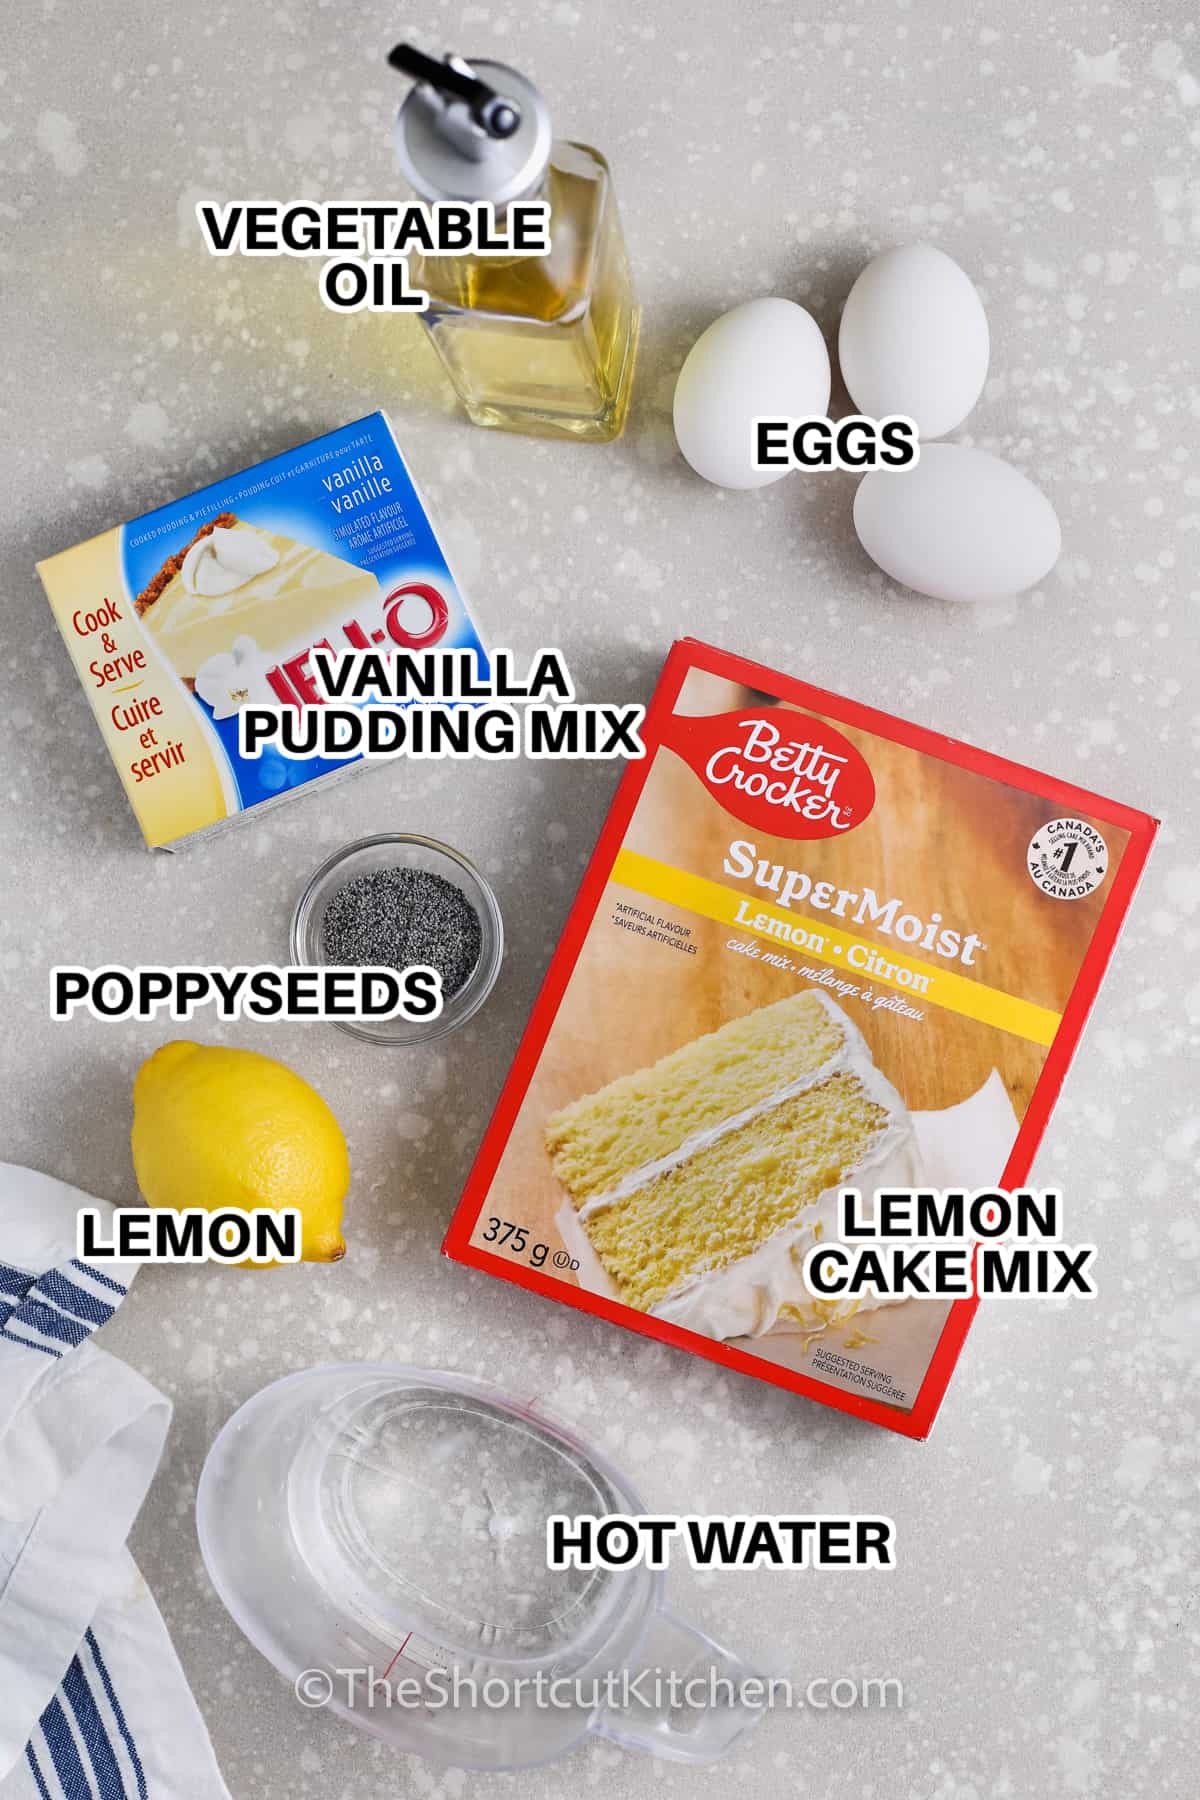 Ingredients to make Lemon Poppyseed Muffins labeled: vegetable oil, eggs, vanilla pudding mix, poppyseeds, lemon cake mix, lemon, and hot water